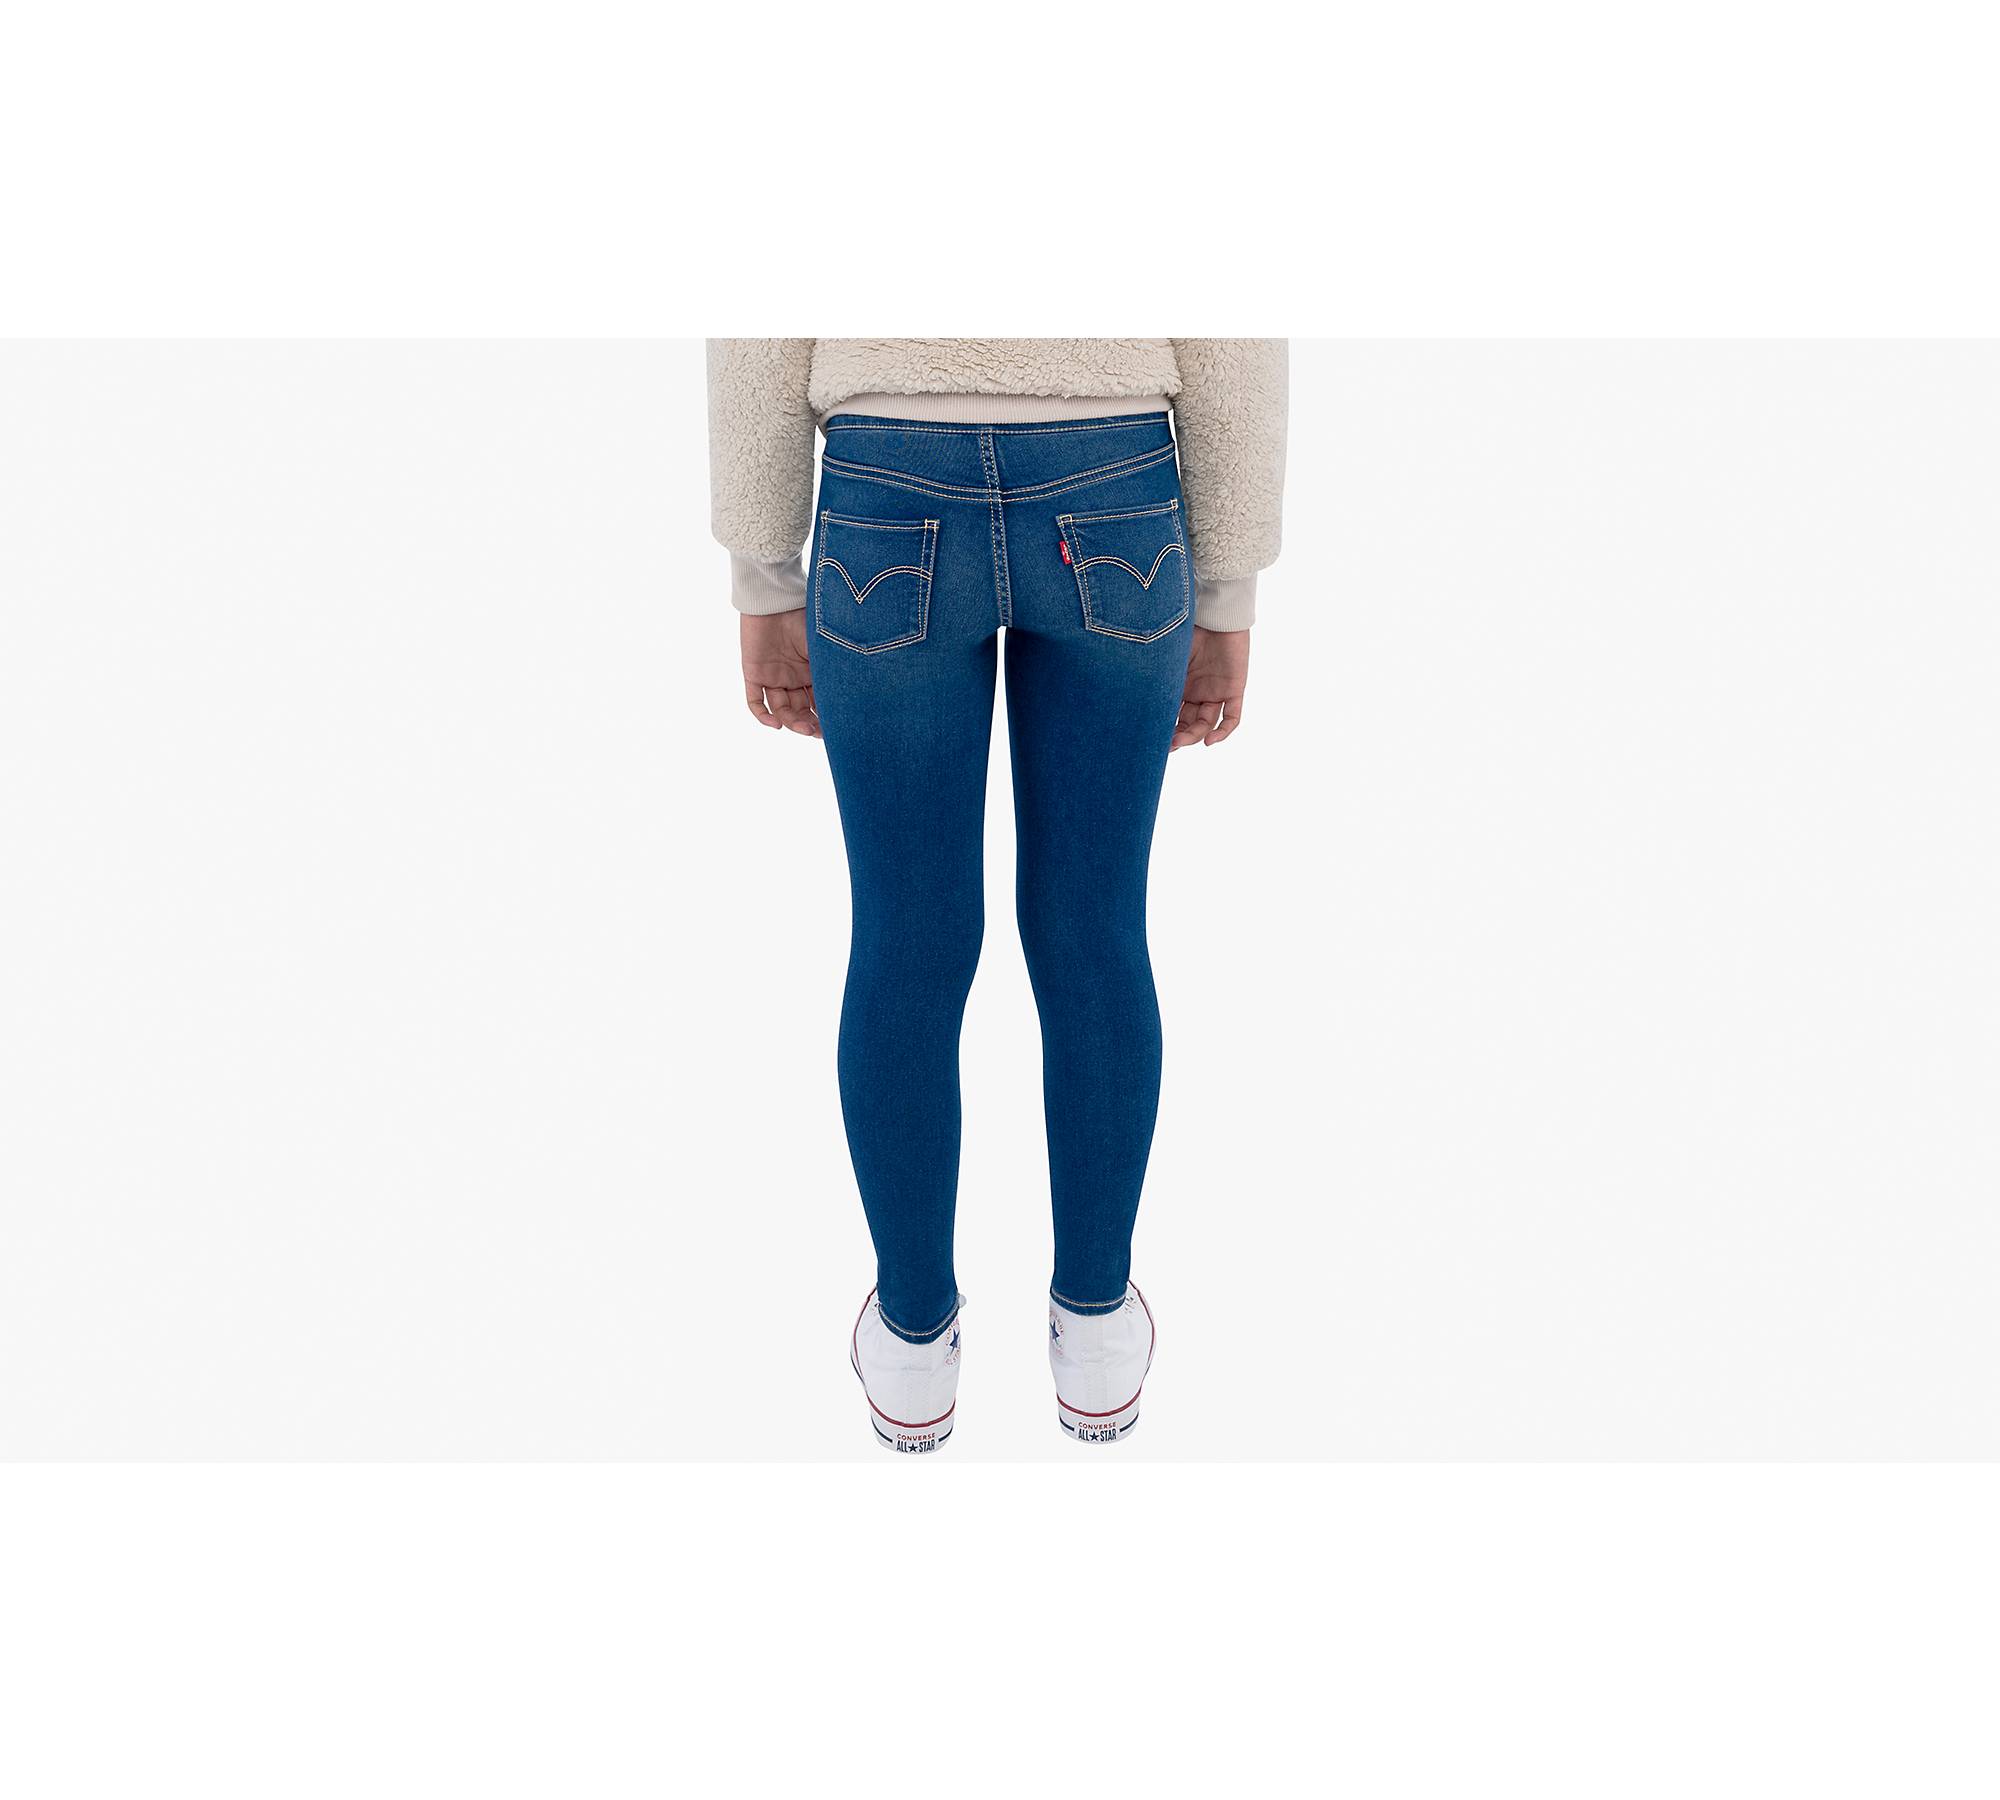 Jeggings Cotton Jeans For Women - Macy's